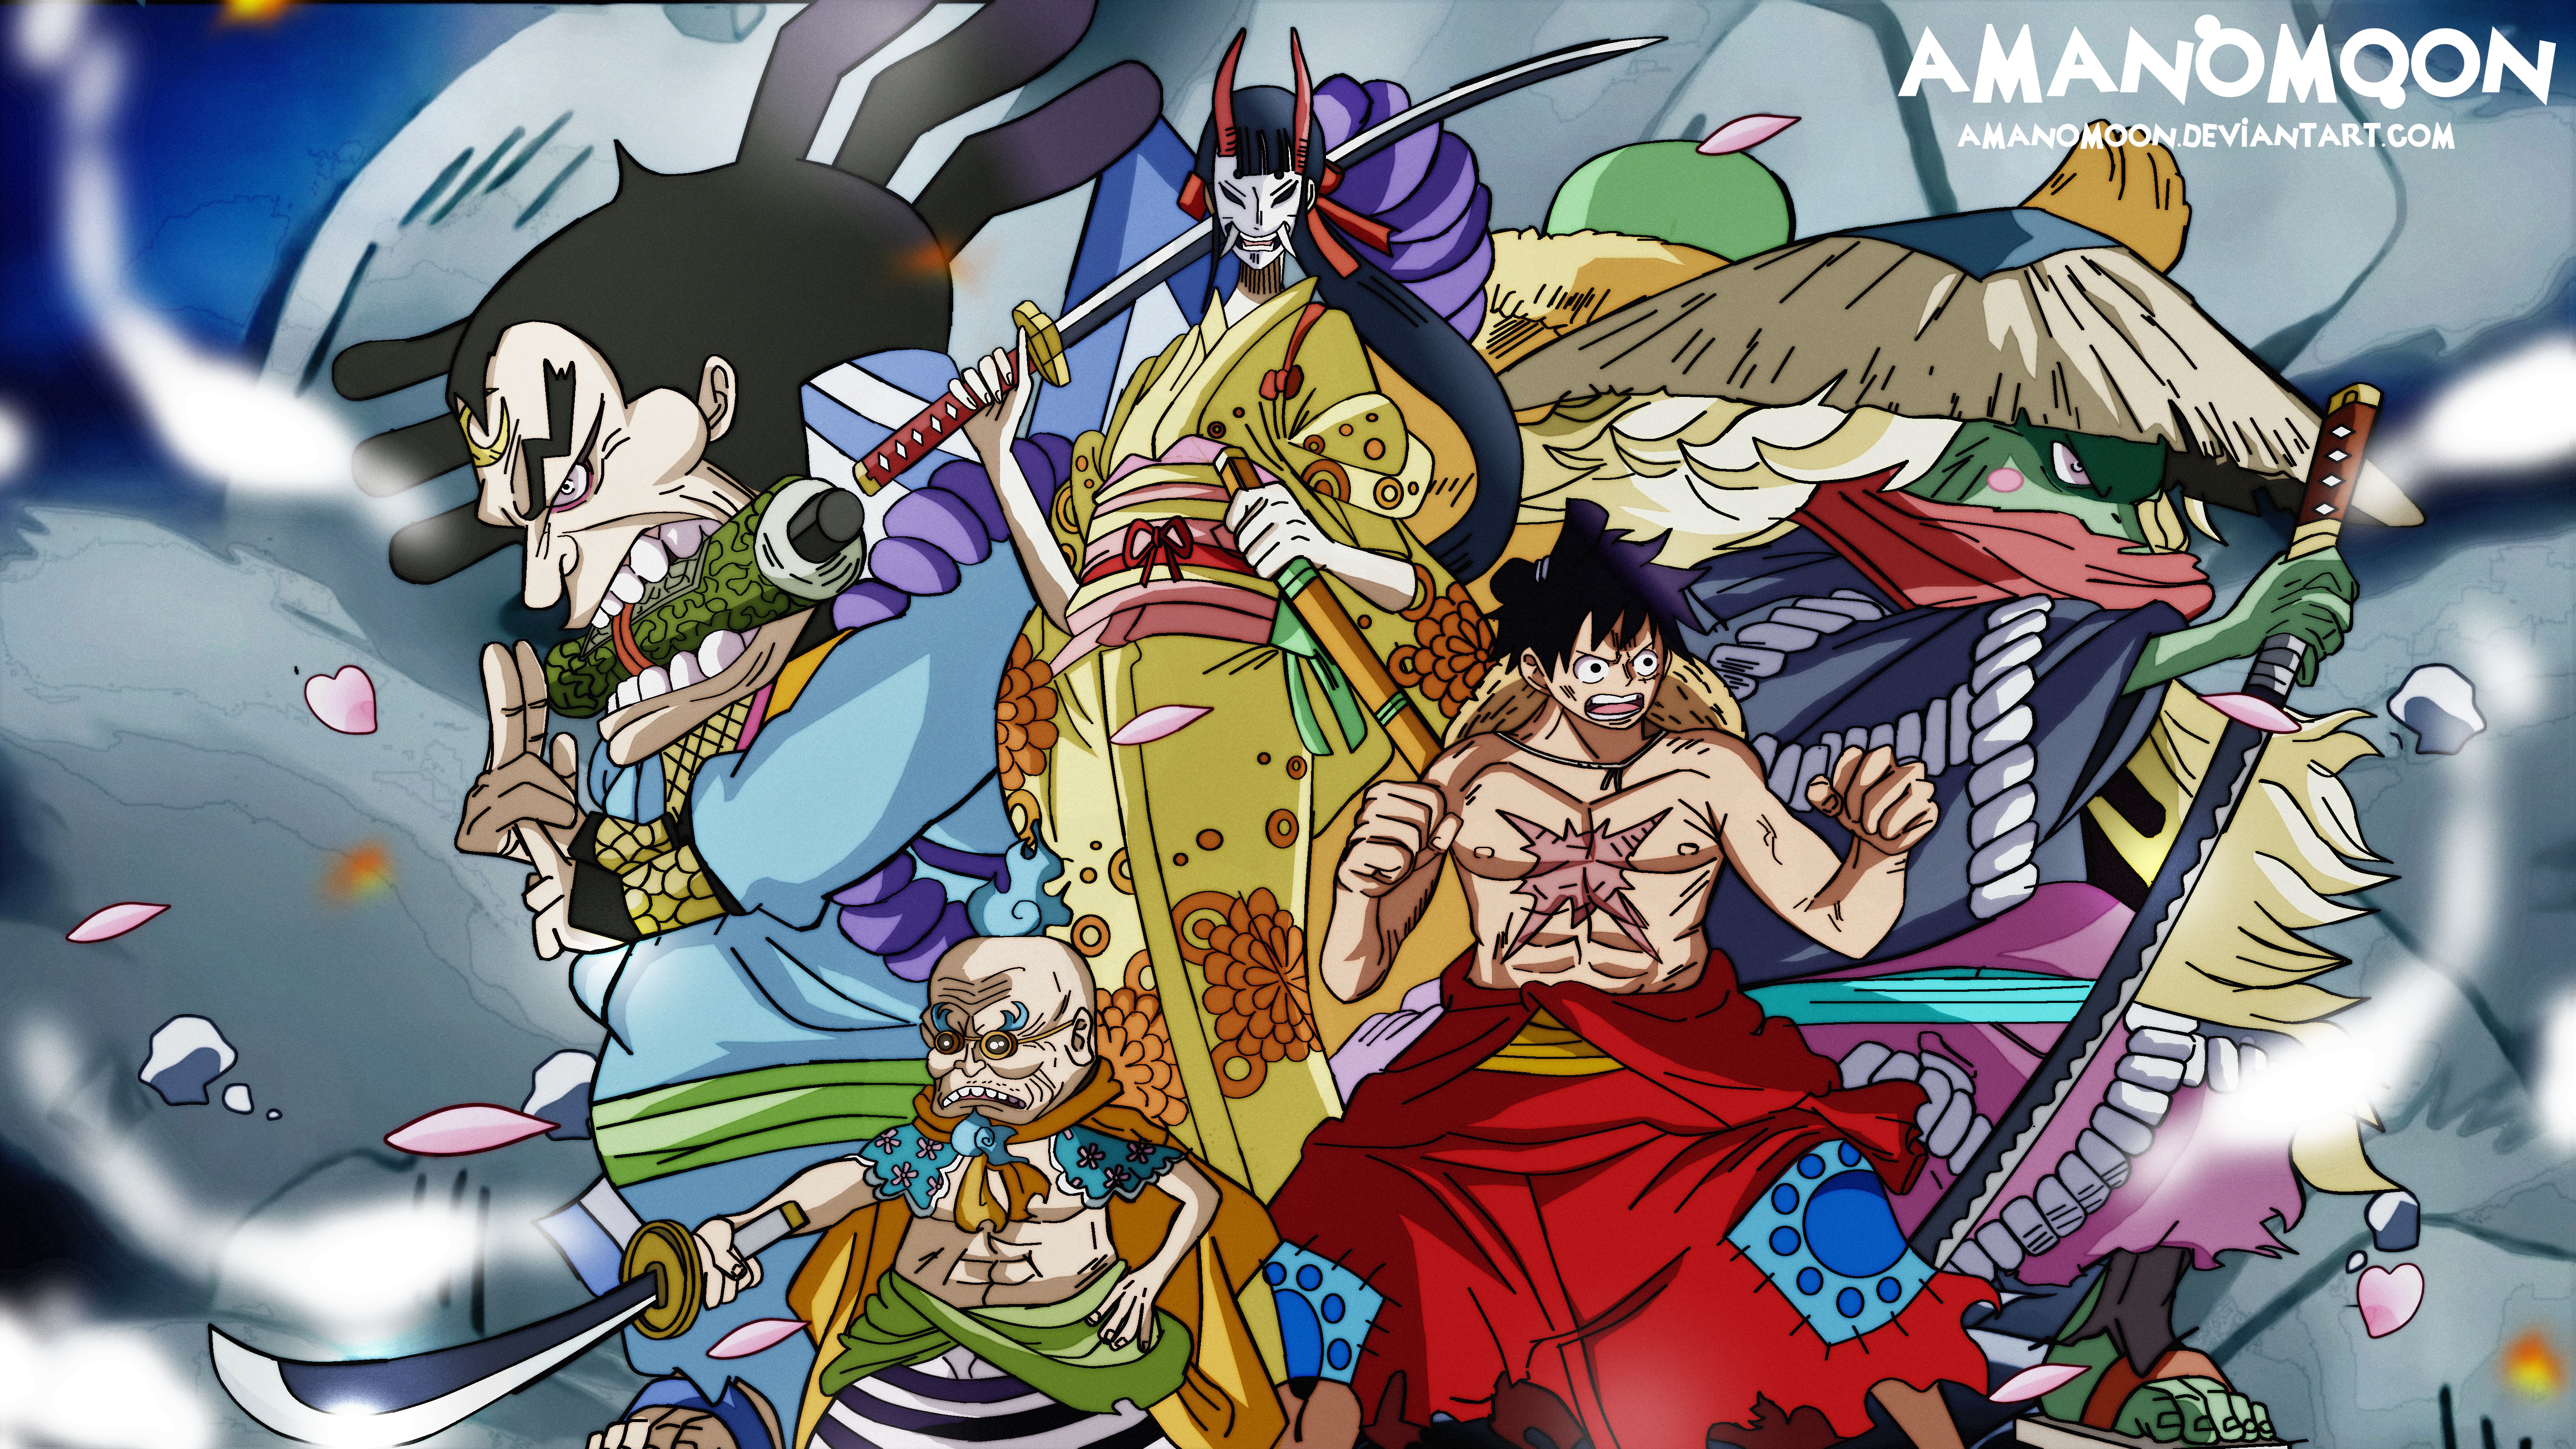 Anime One Piece 4k Ultra HD Wallpaper by Misto